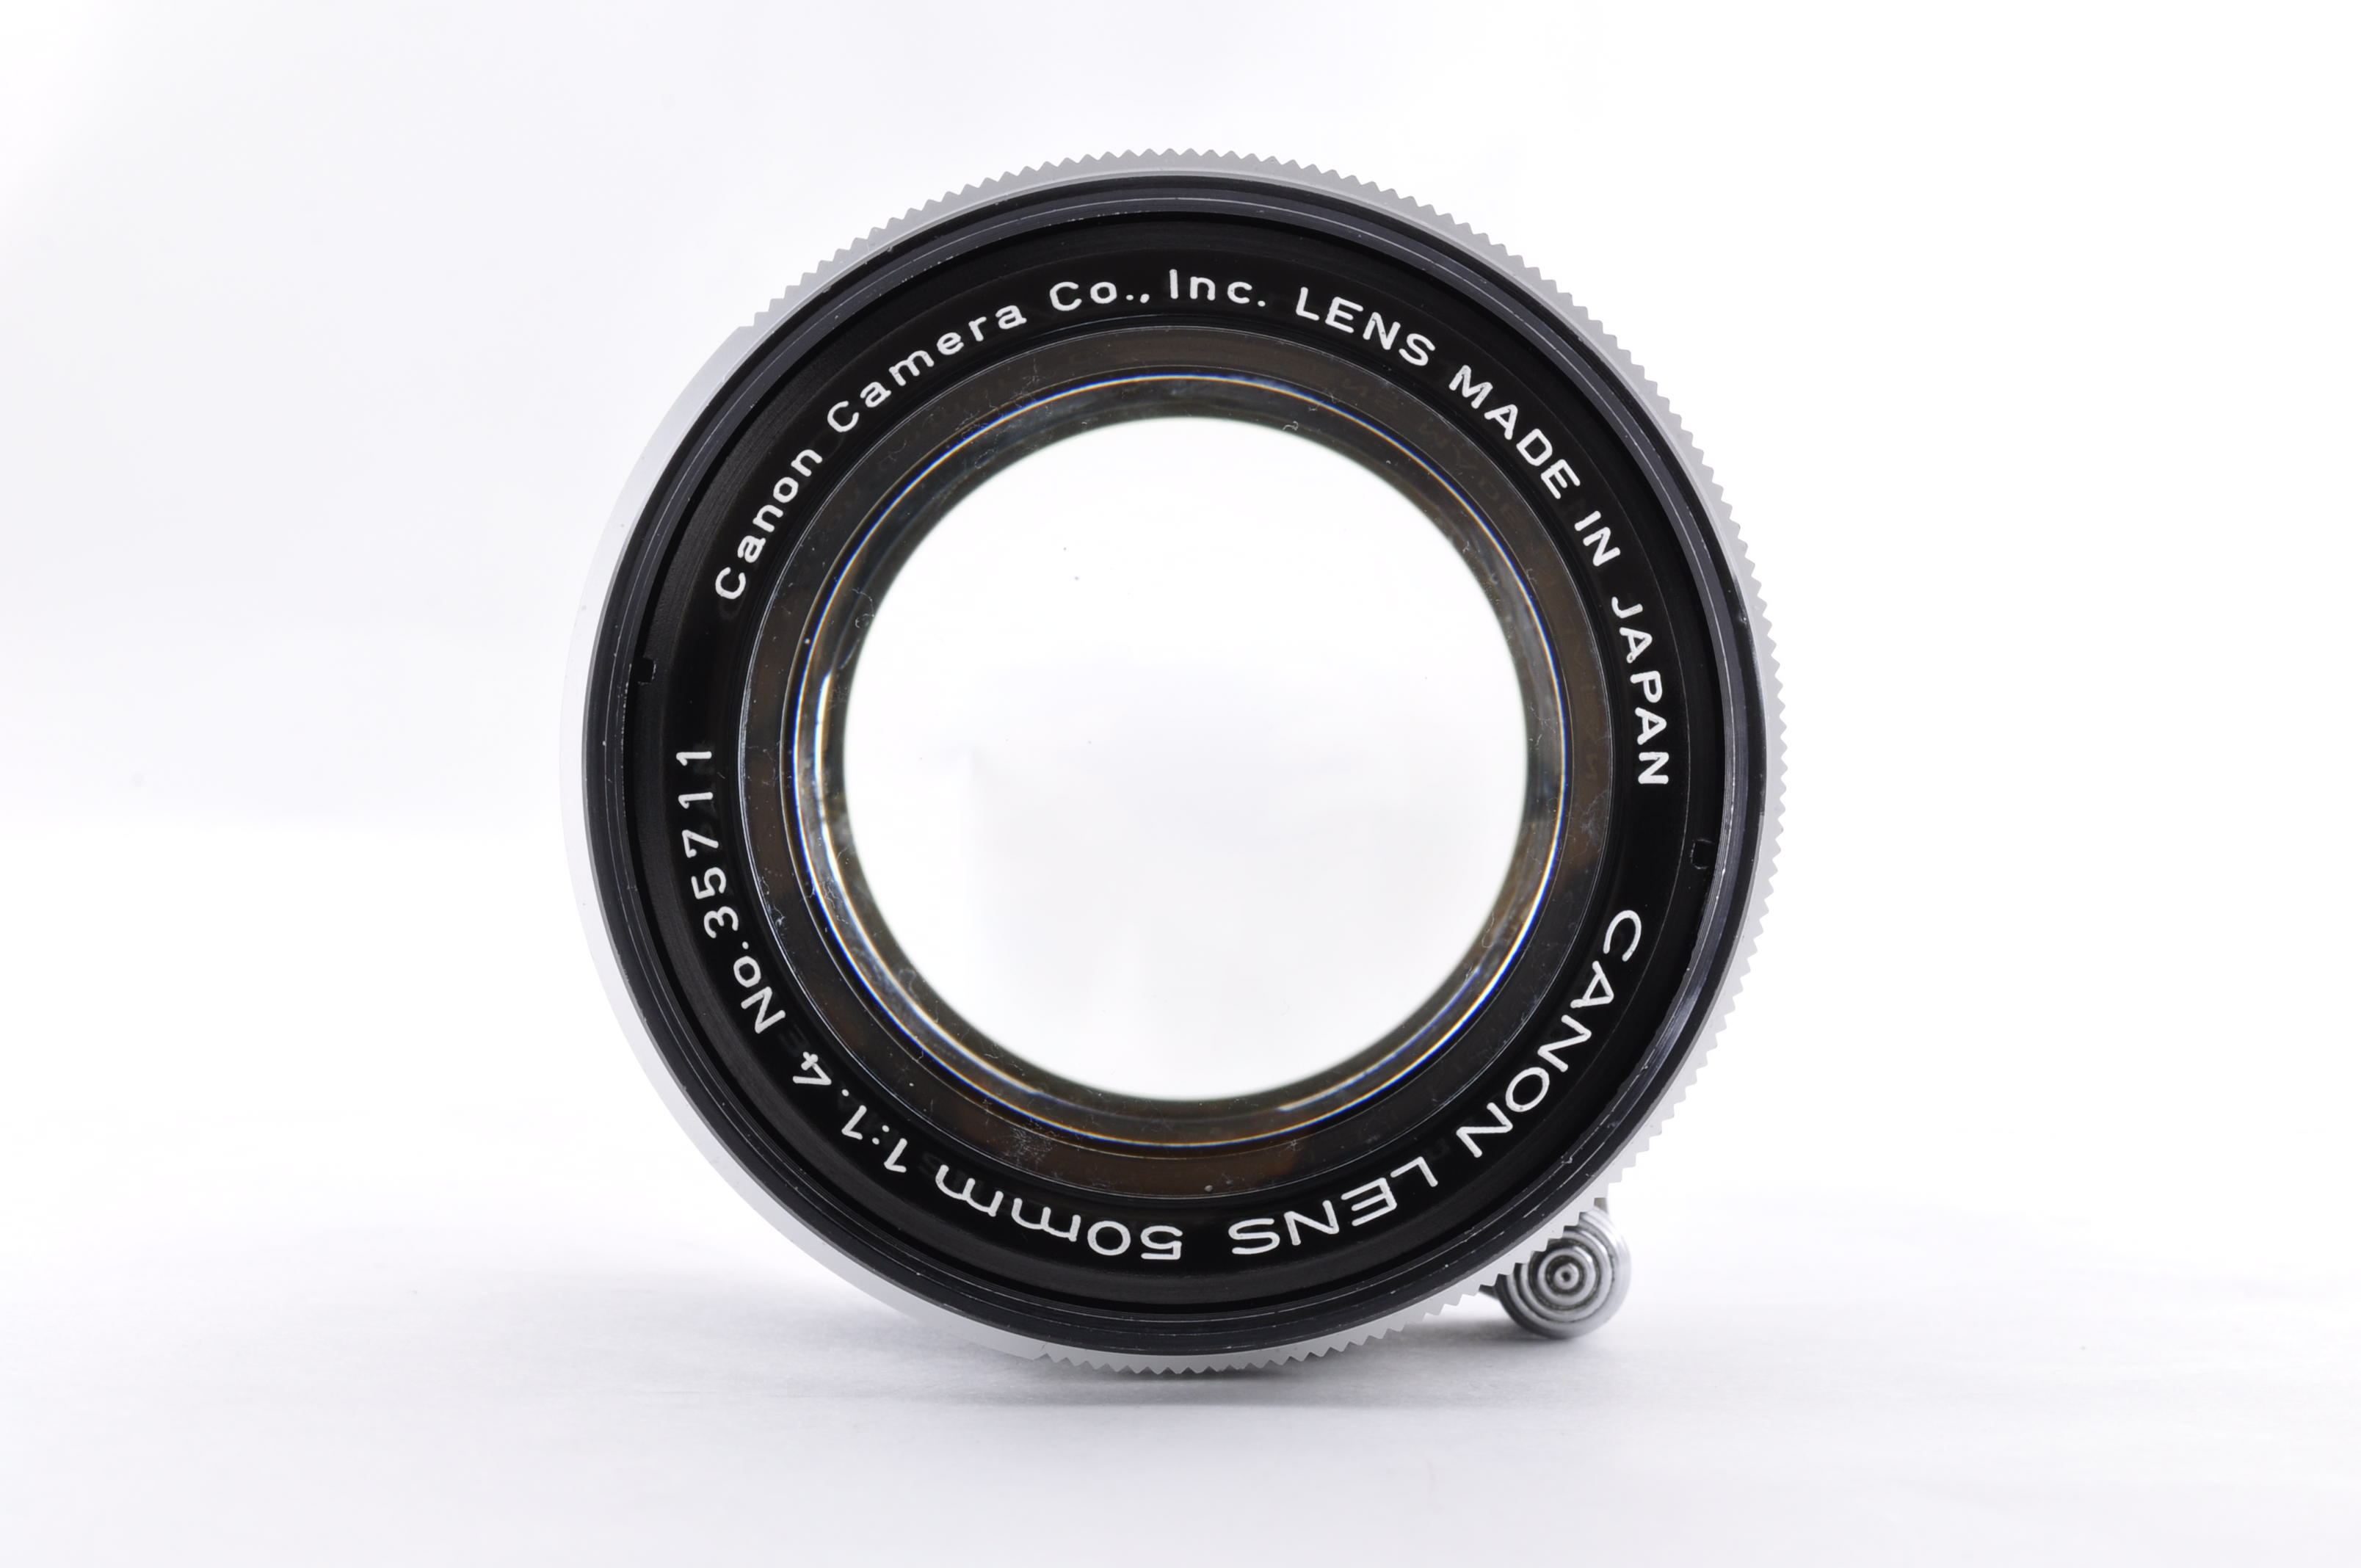 Canon L39 50mm f/1.4 Lens LTM Leica Screw Mount w/Caps [Near Mint] From Japan img05